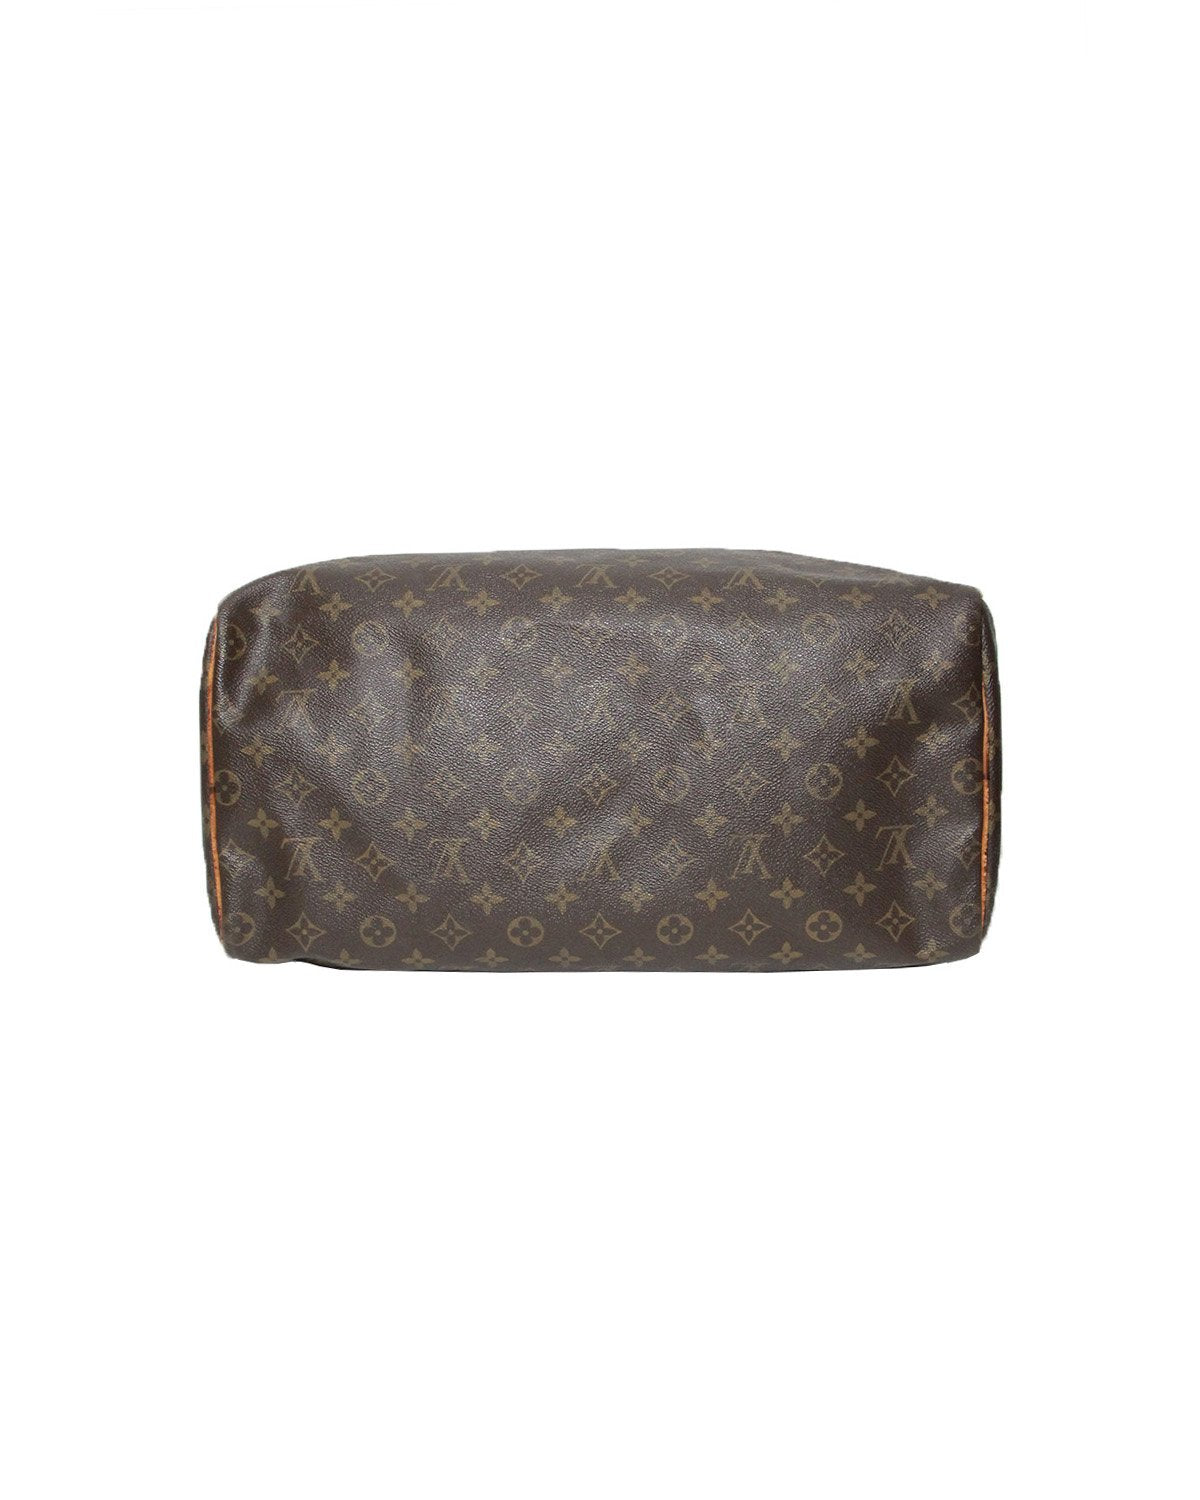 Louis Vuitton Monogram Speedy 40 Bag - 8 For Sale on 1stDibs